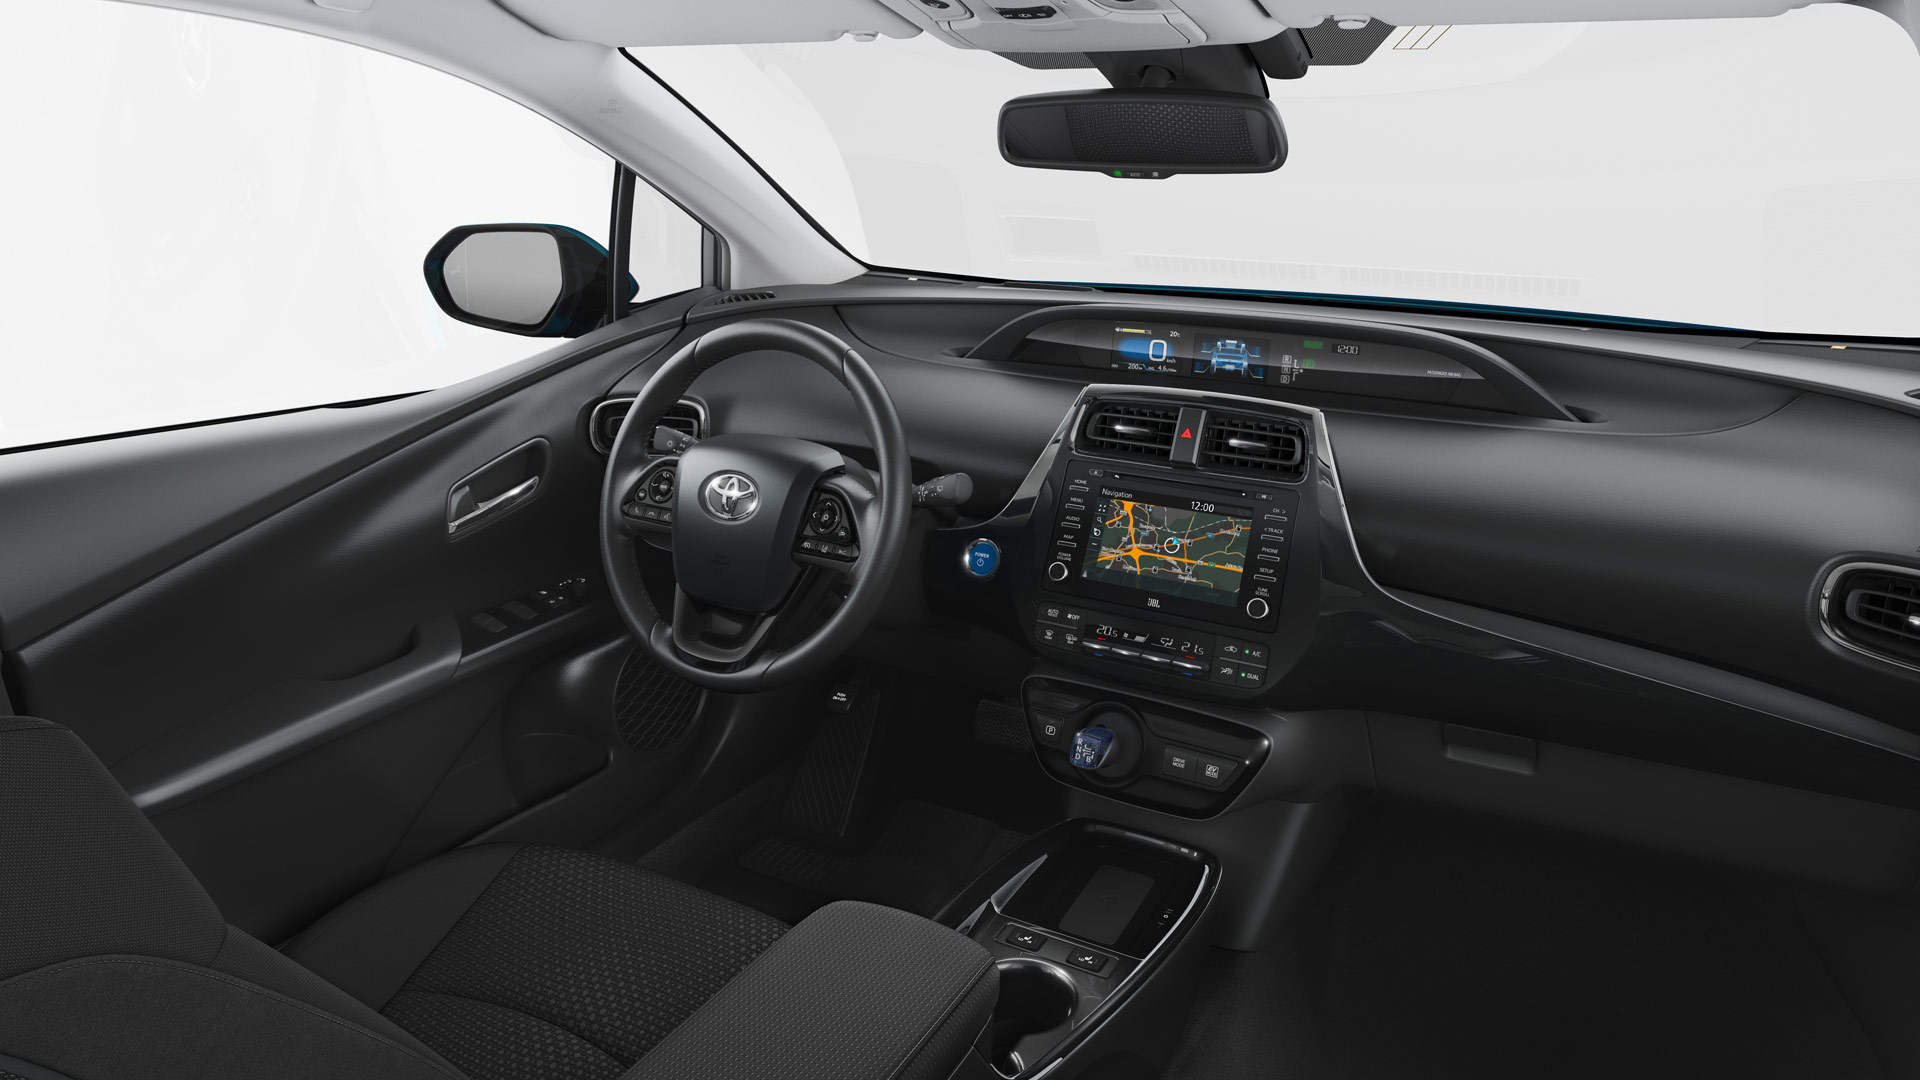 Toyota Corolla Hatchback dashboard close up